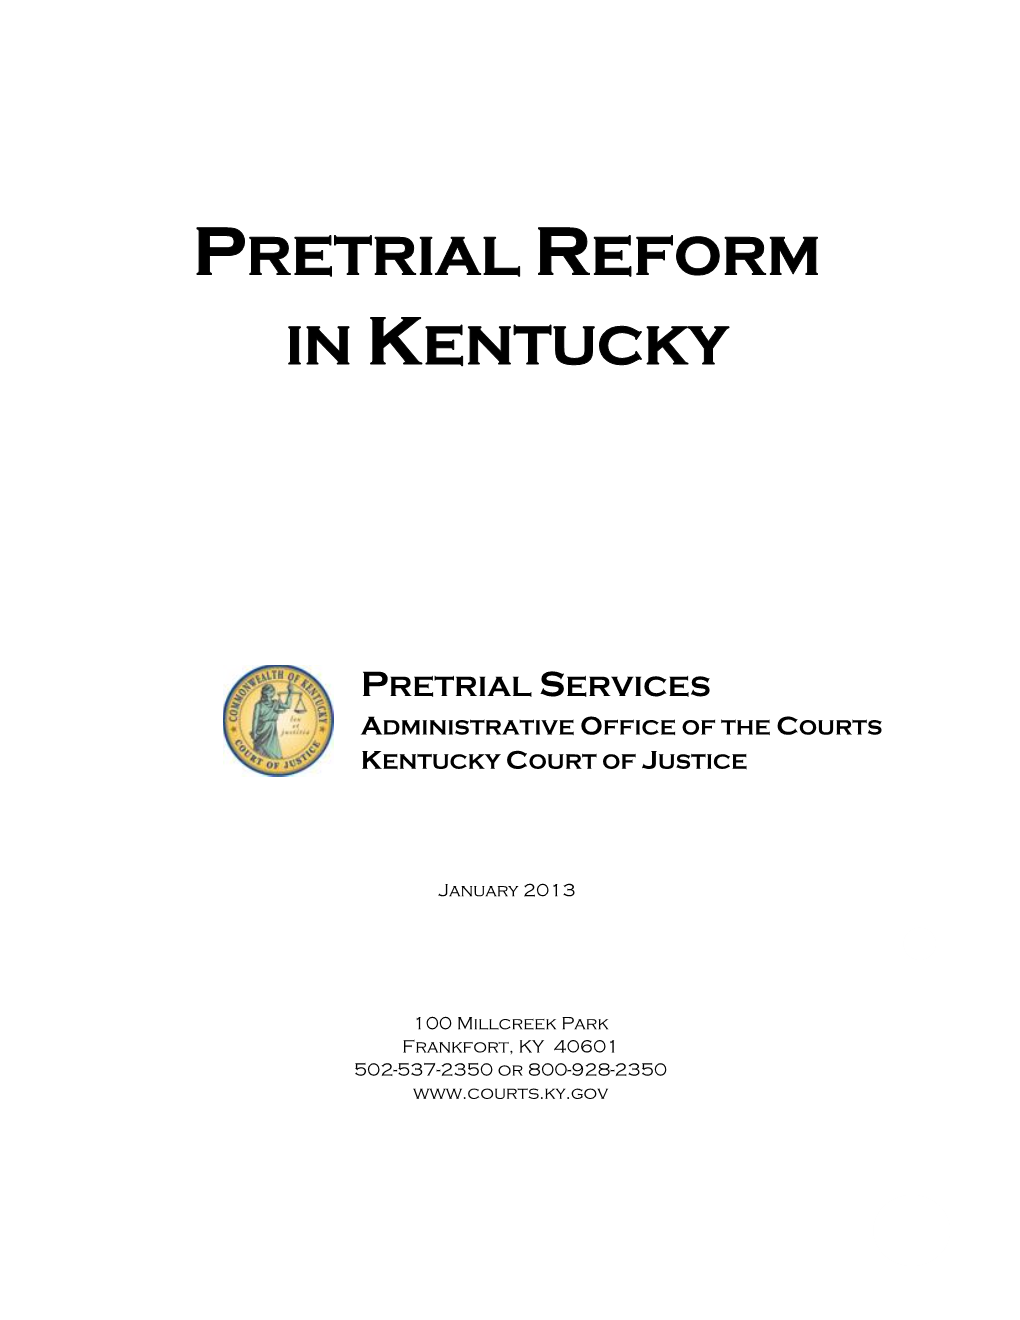 Pretrial Reform in Kentucky